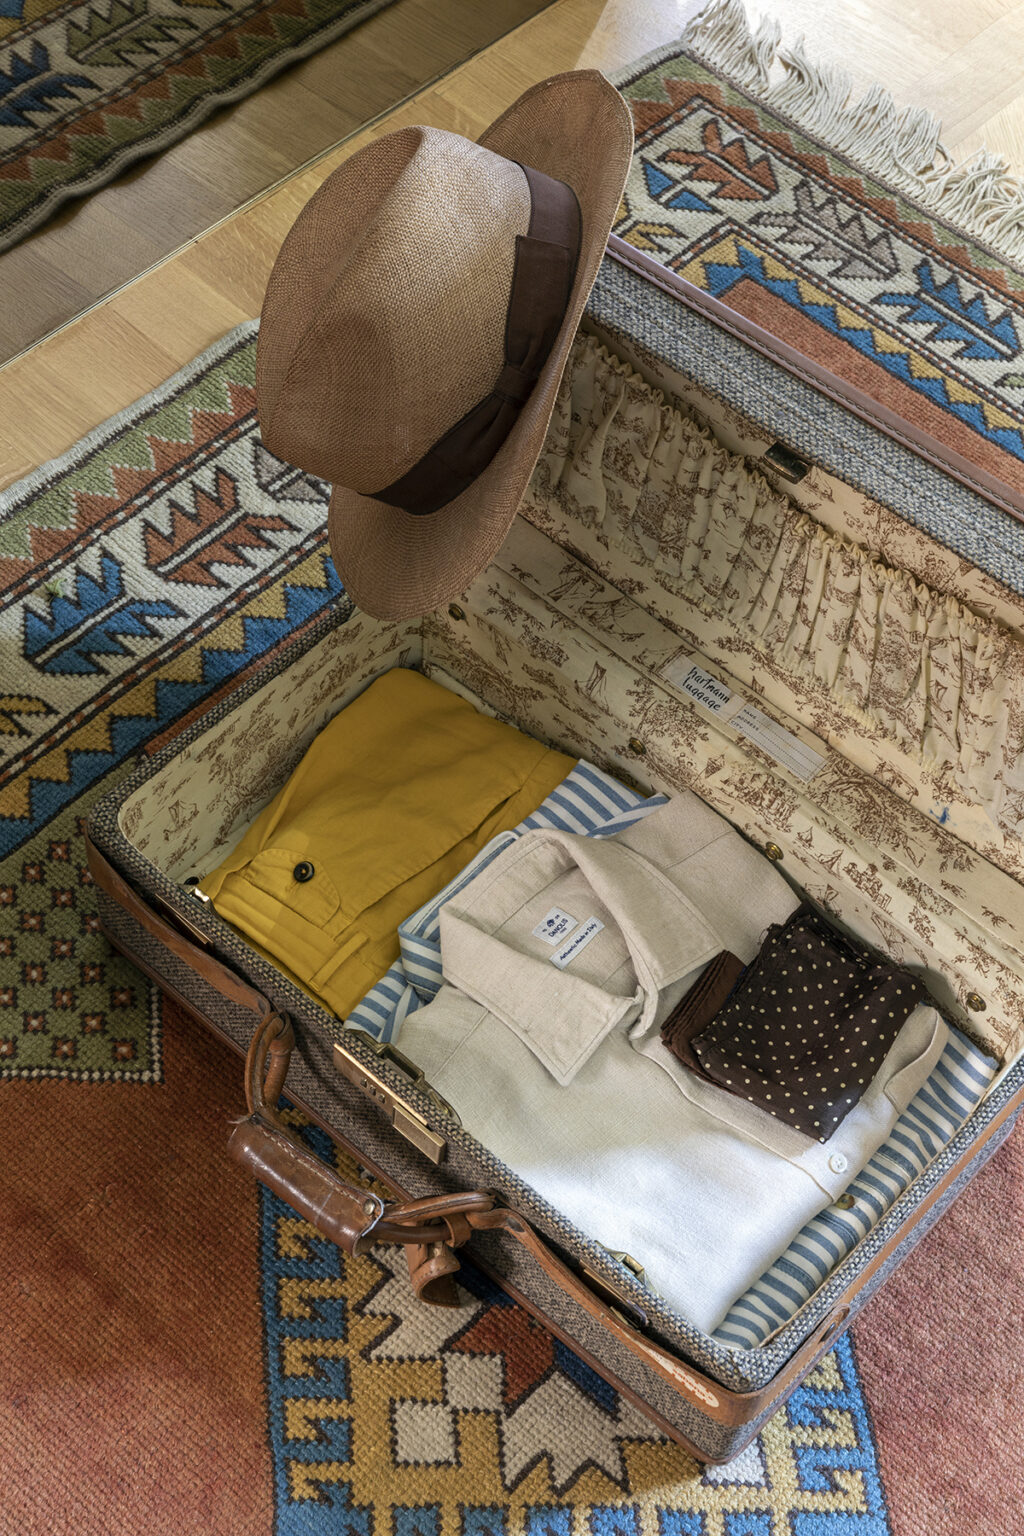 Hartmann Luggage suitcase by Alfonso Tagliaferri ©Serena Eller